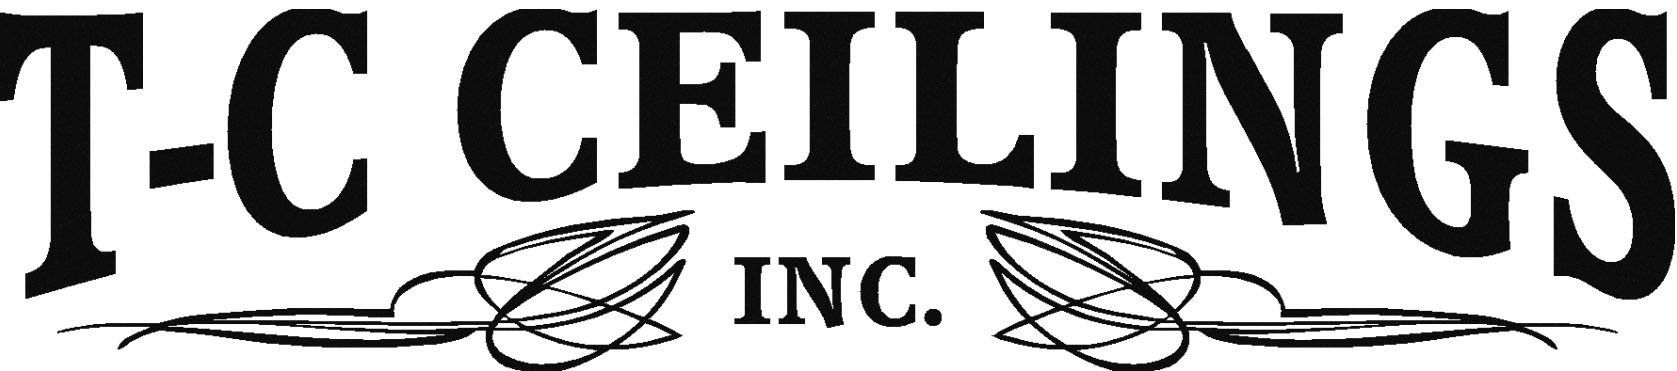 T-C Ceilings Inc. - Logo